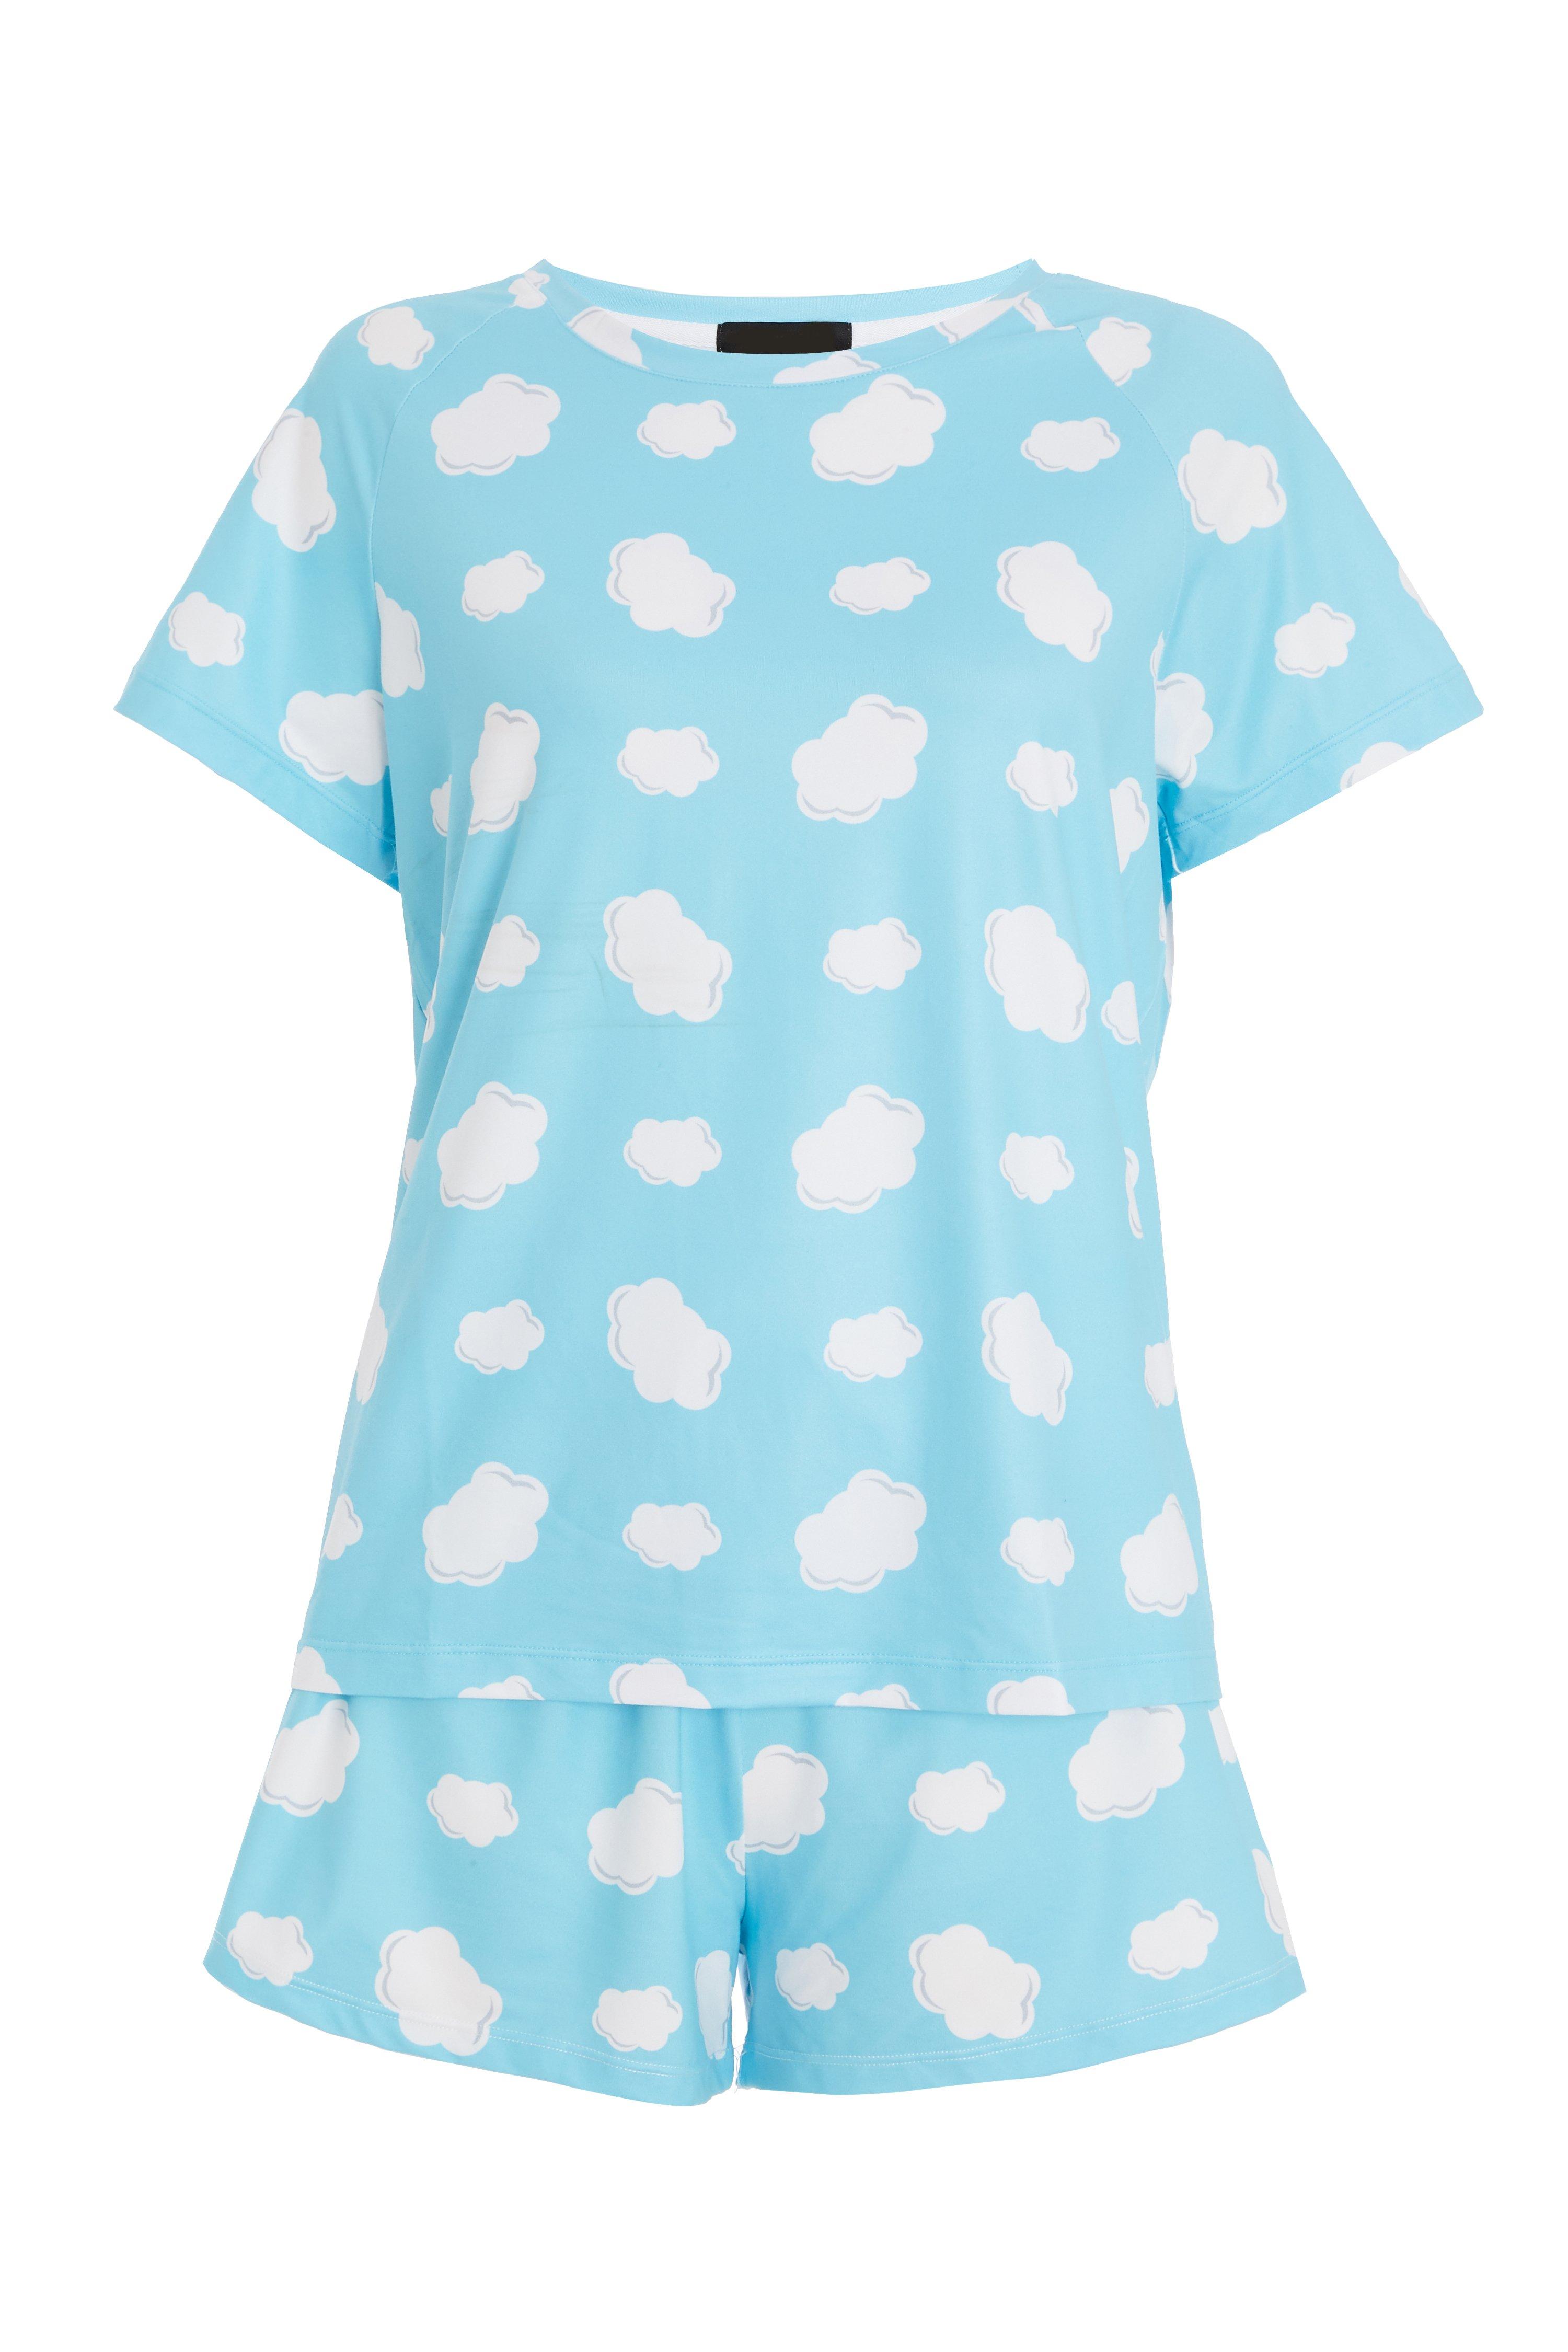 Blue Cloud Short Pyjama Set - Quiz Clothing